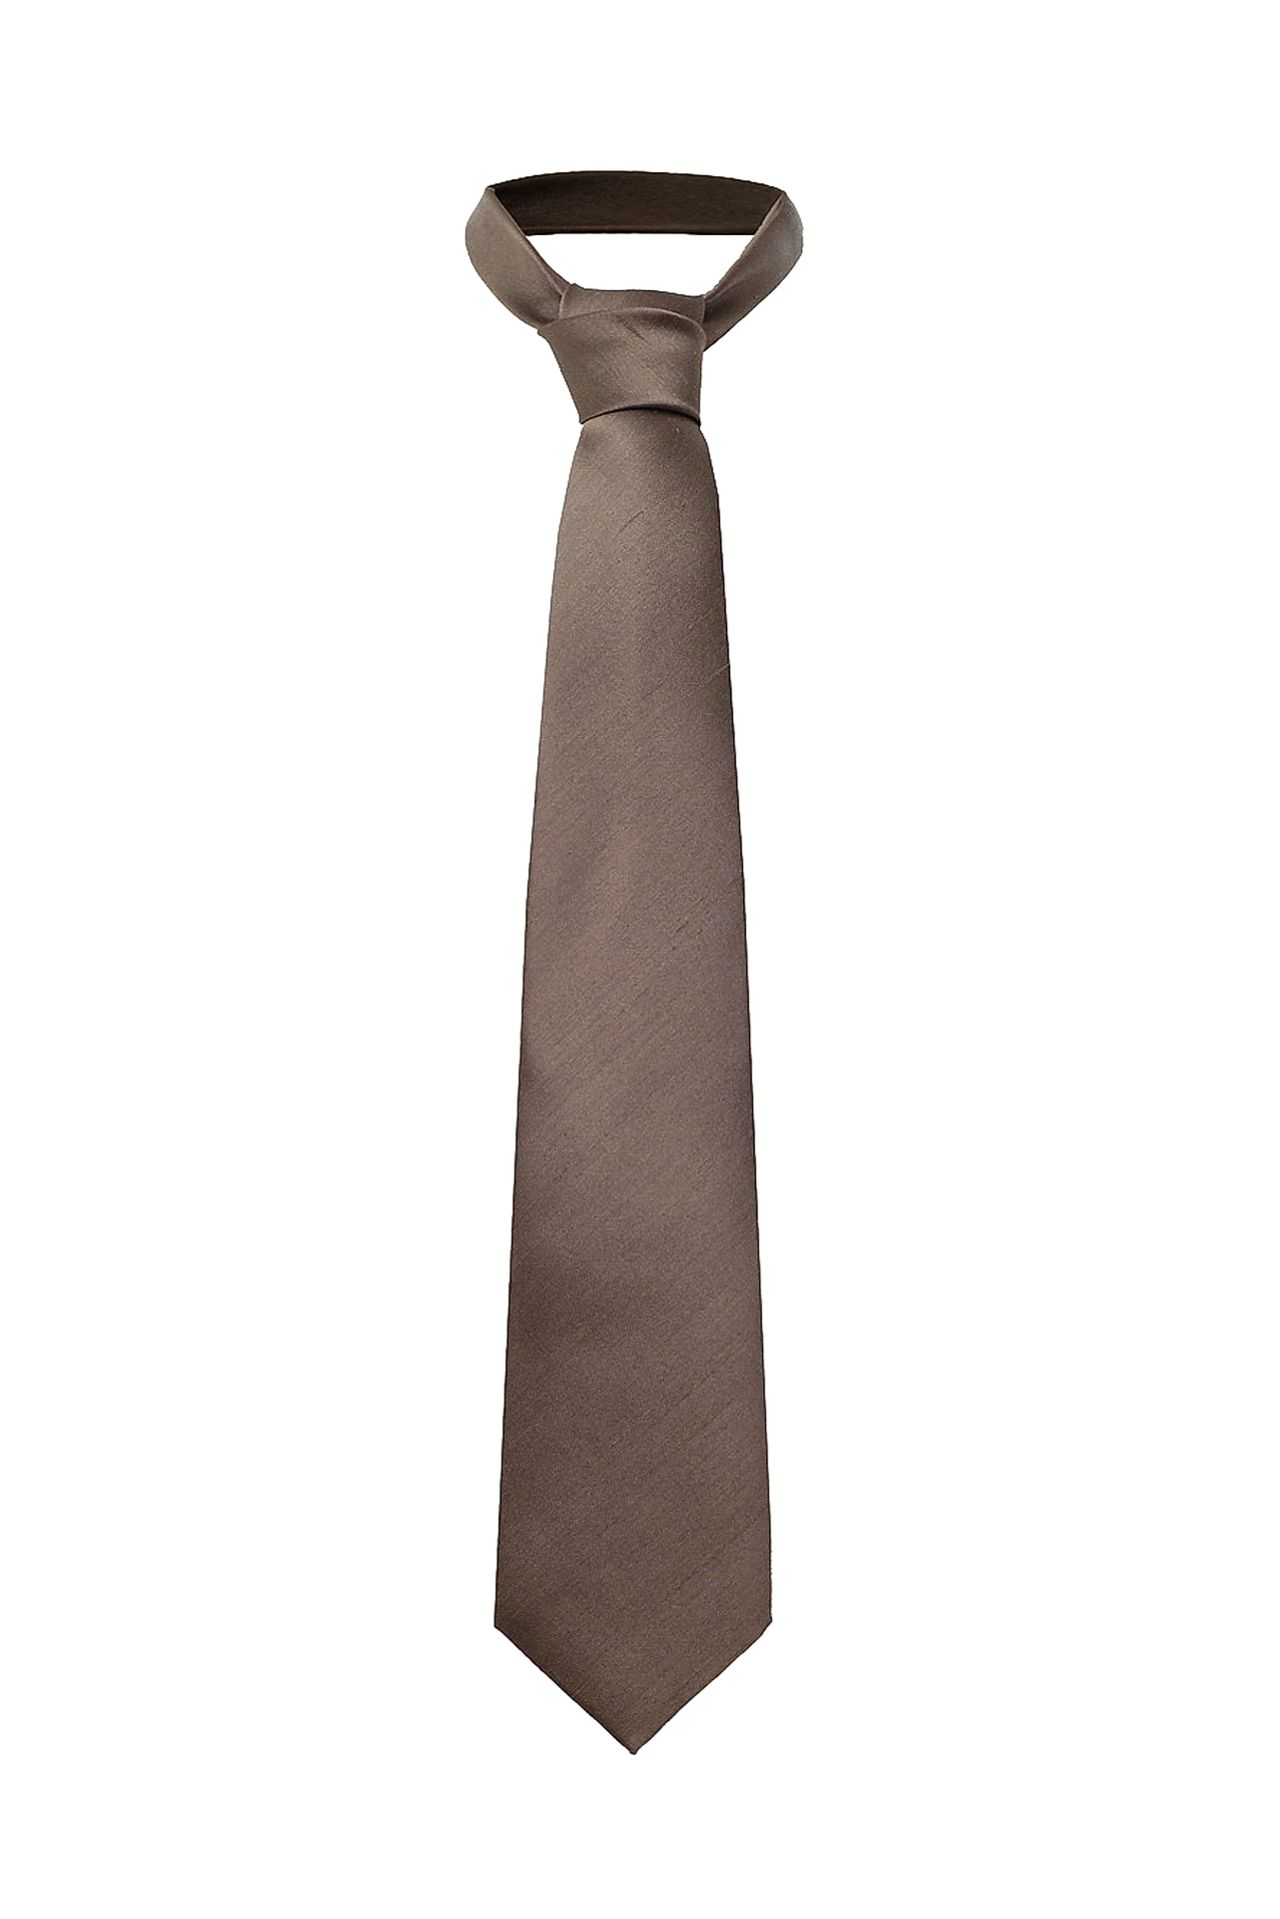 Картинка галстук мужской. Галстук мужской. Галстук военный. Галстук коричневый. Широкий галстук коричневый.